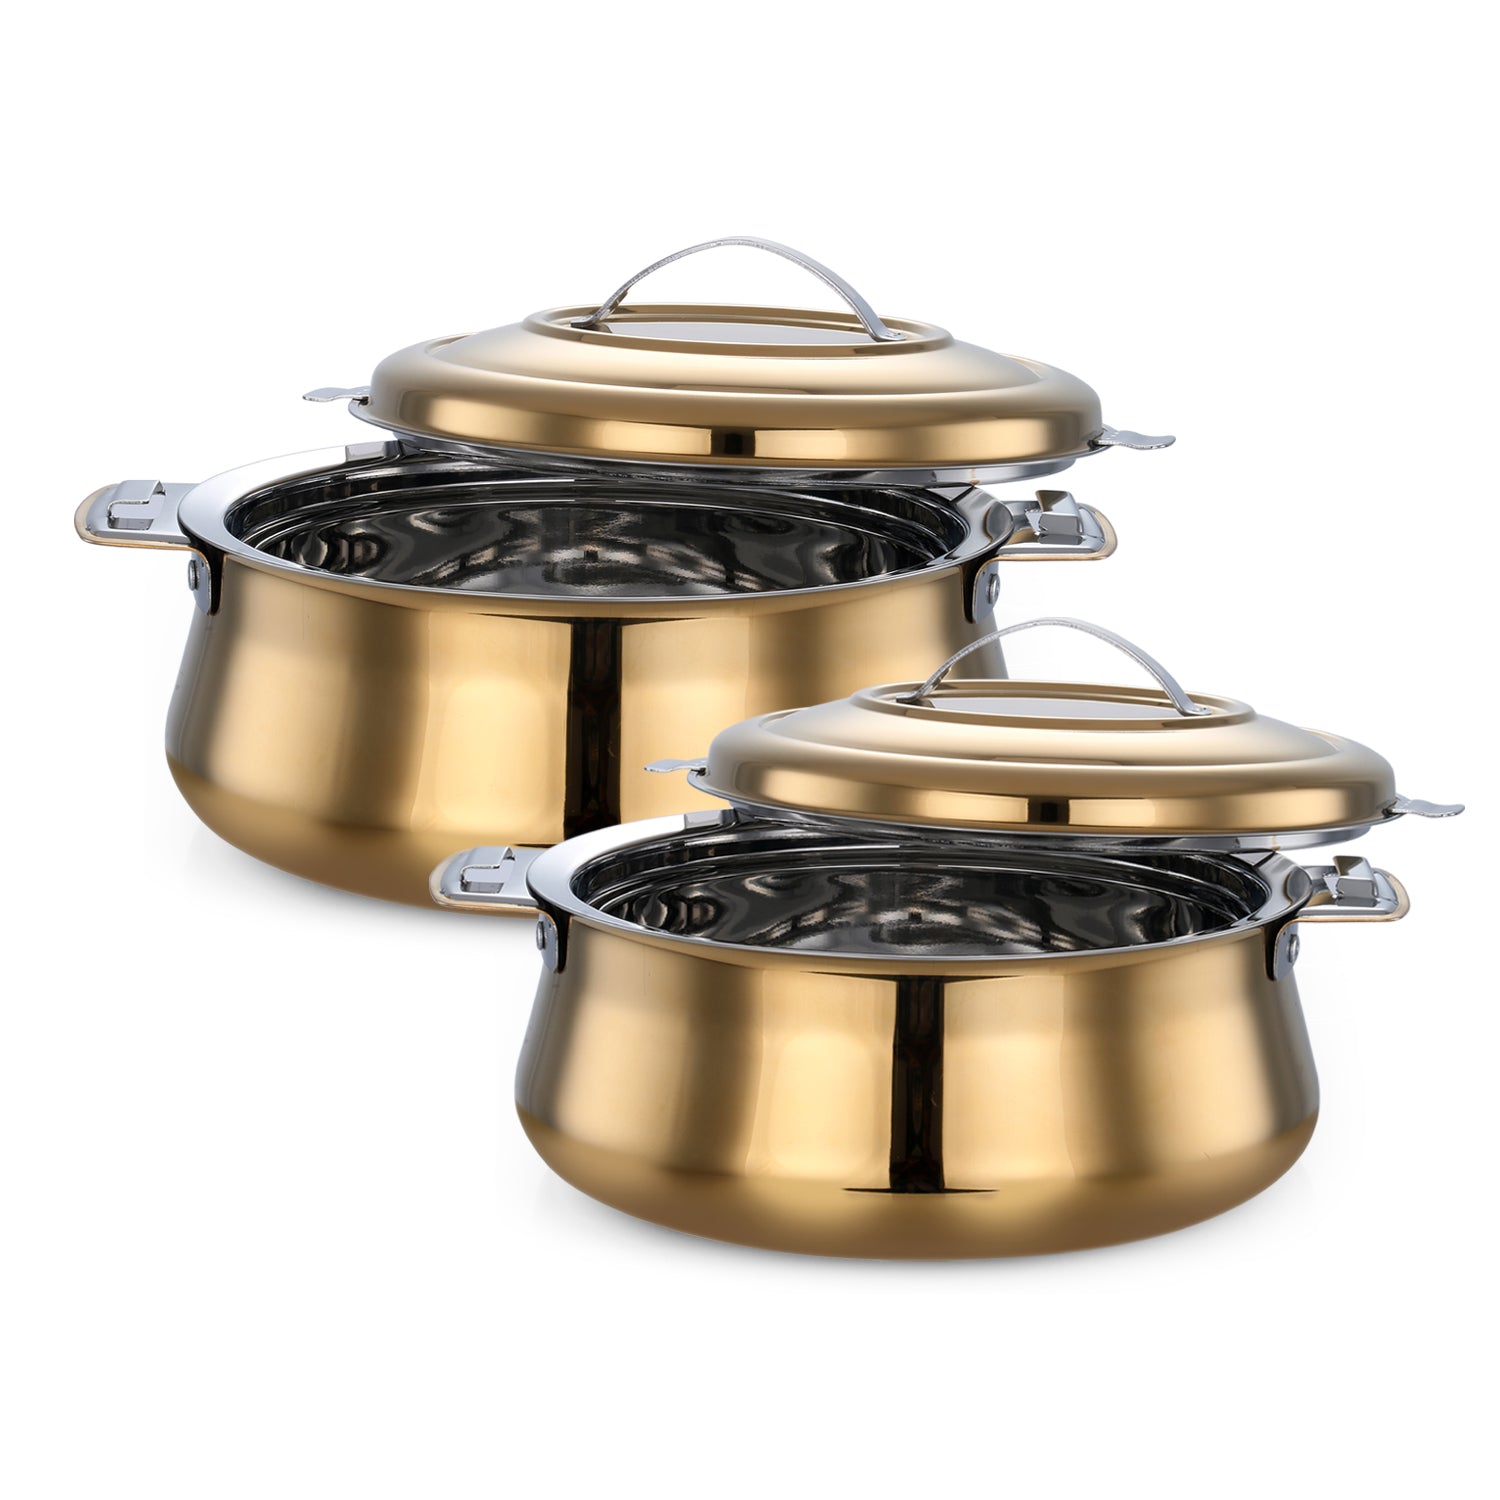 AVIAS Riara Gold Premium Stainless steel casserole set of 2 open